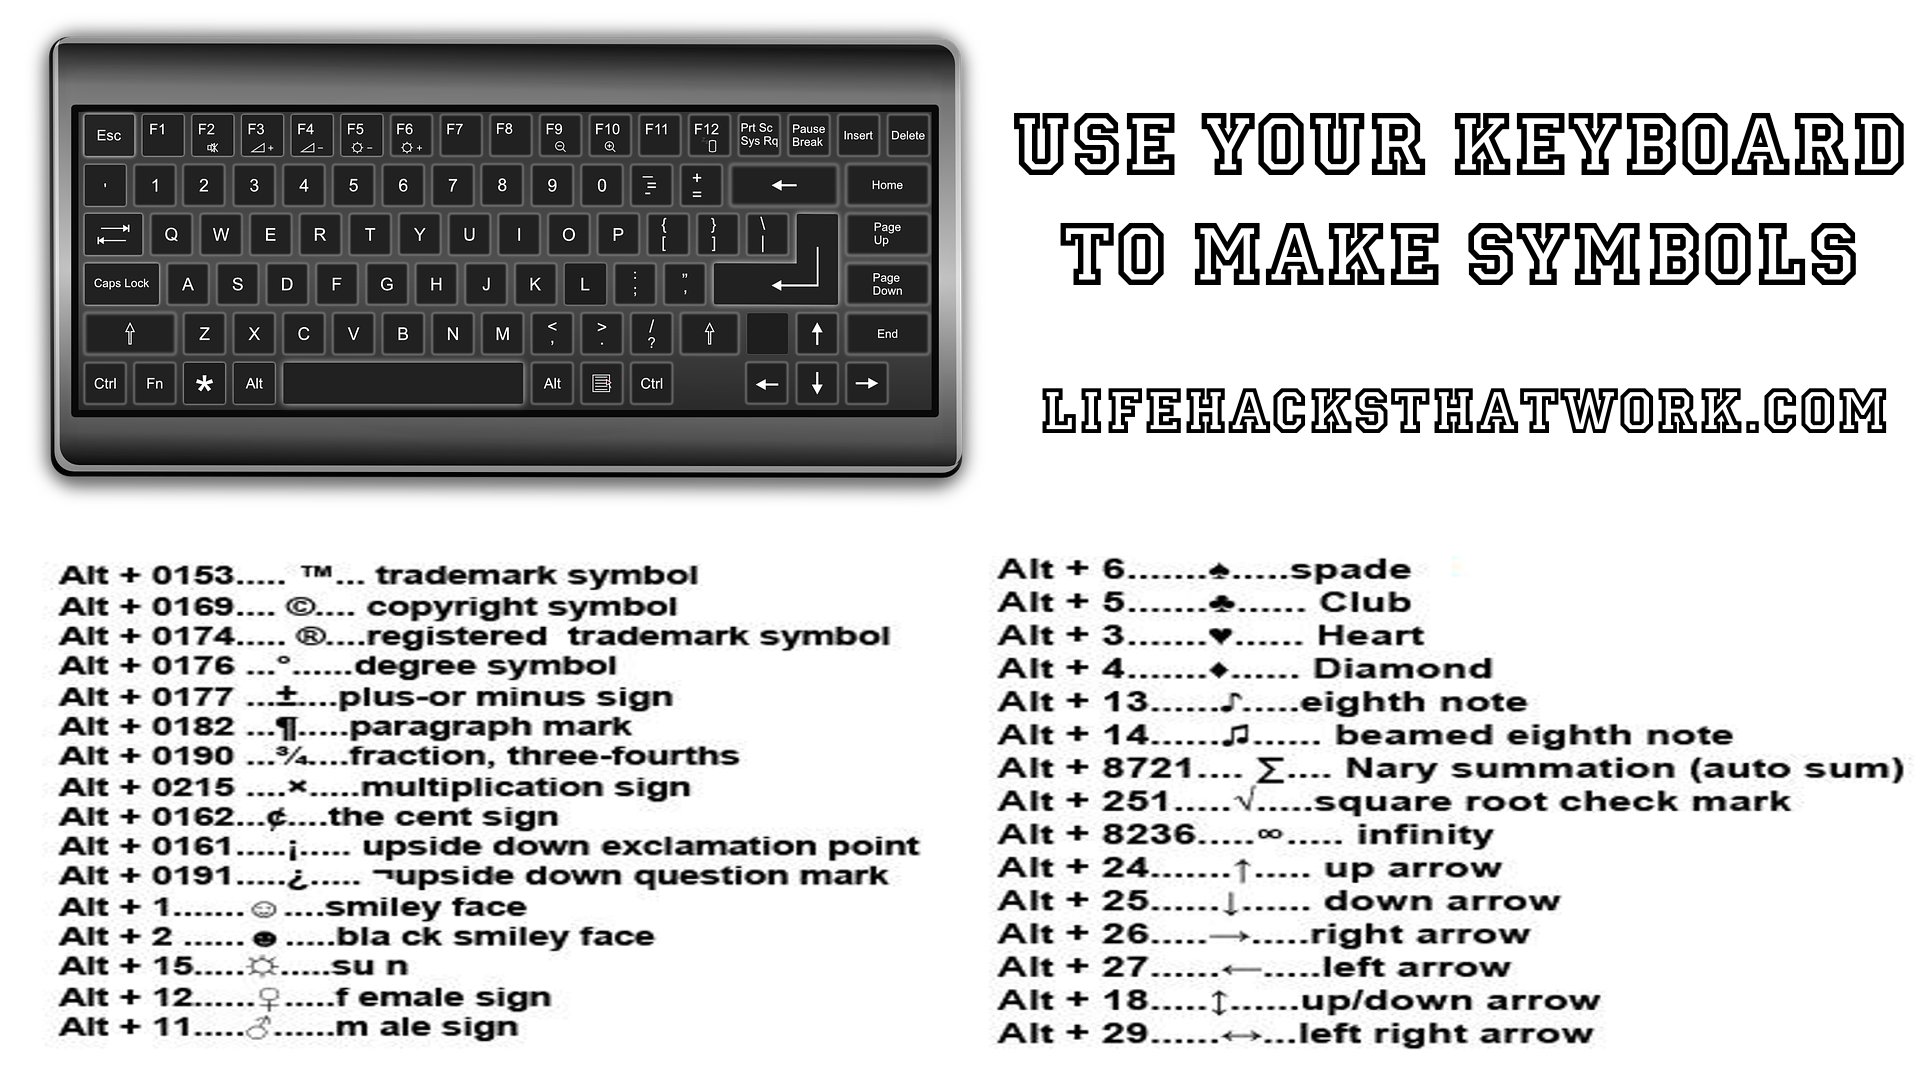 Kak na klaviature. Символы на клавиатуре. Символы на клавиатуре компьютера. Клавиатура символов на ПК. Дополнительные значки на клавиатуре.